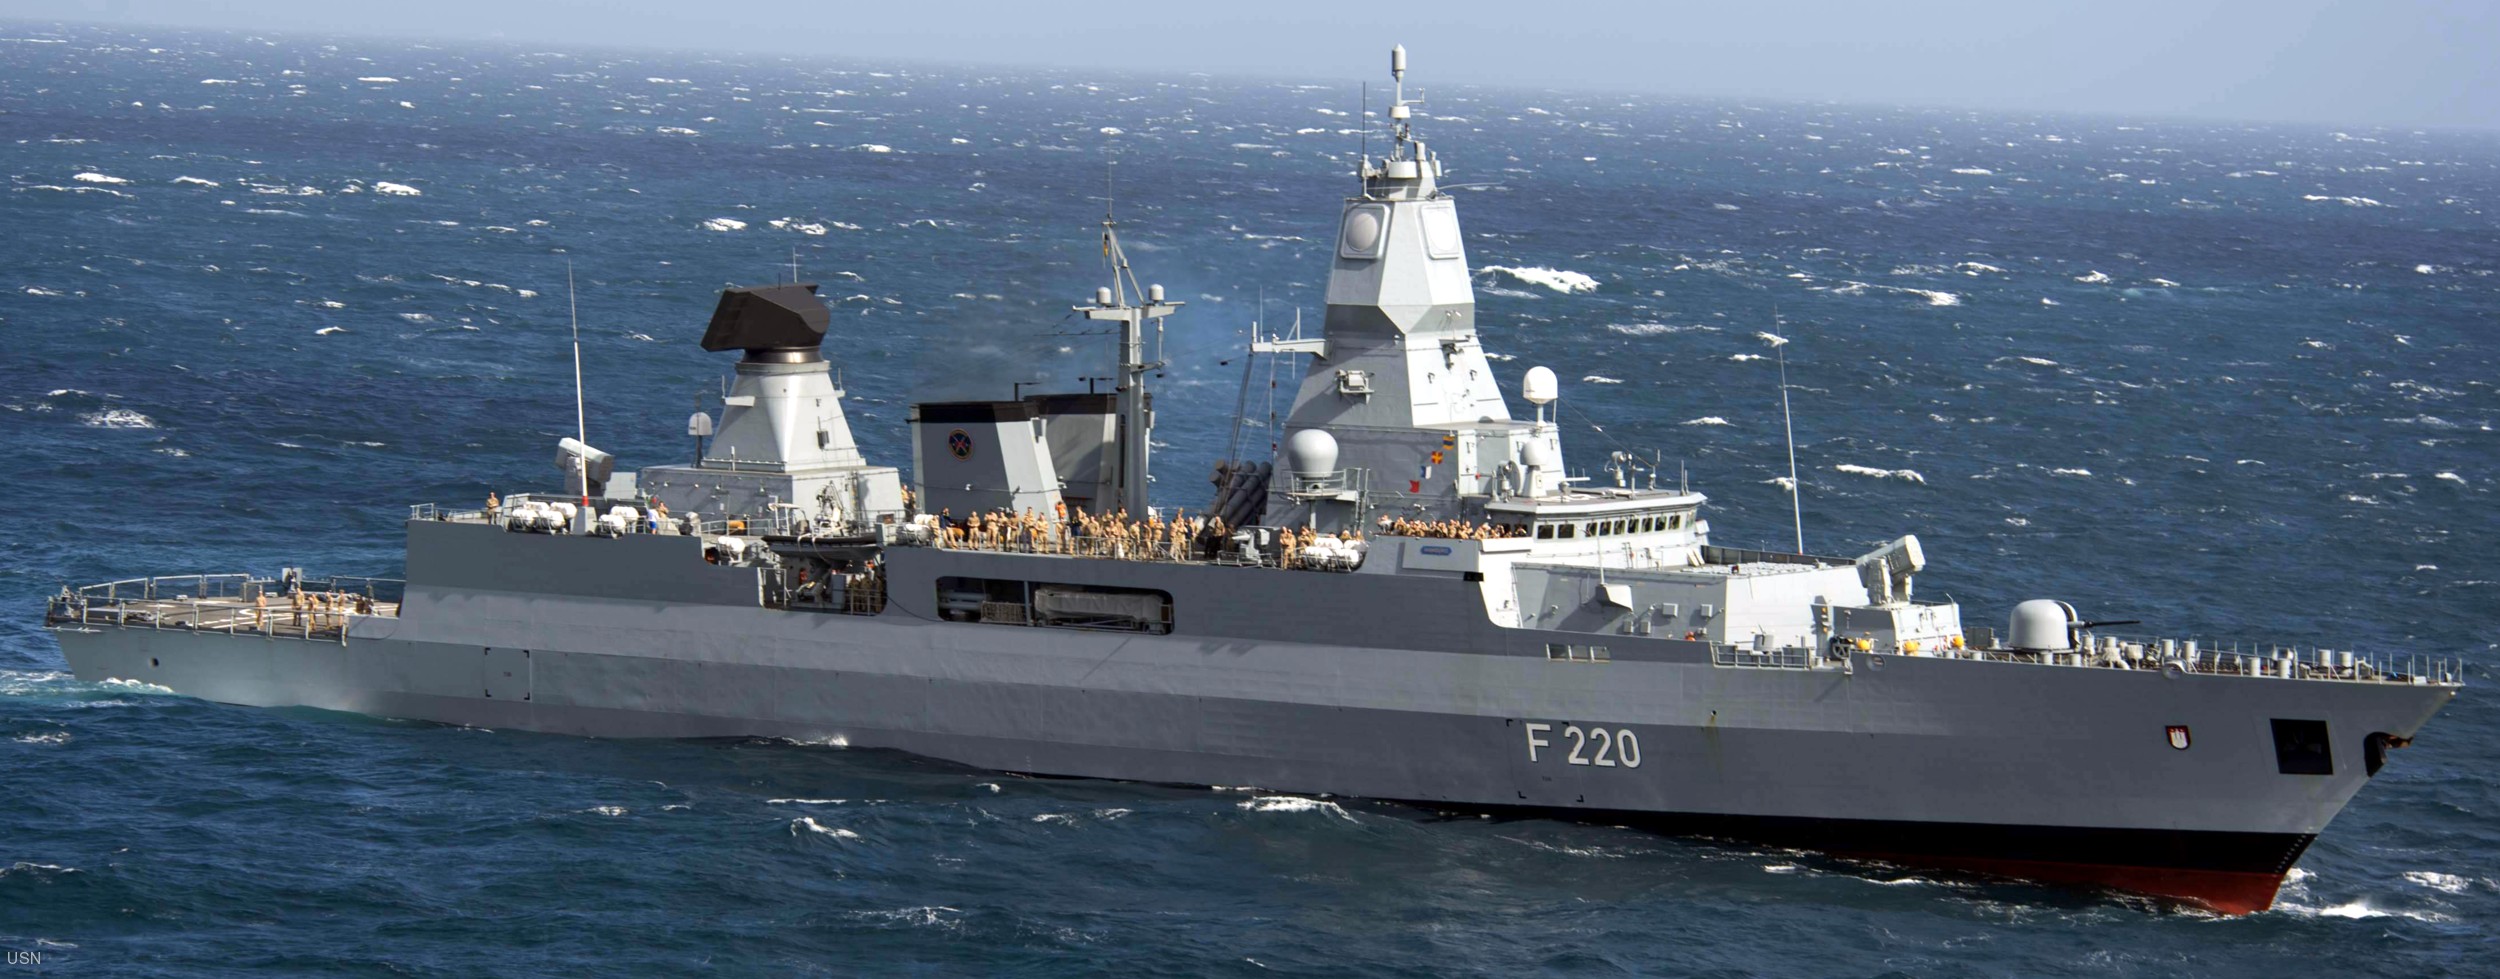 f-220 fgs hamburg type 124 sachsen class guided missile frigate german navy 13